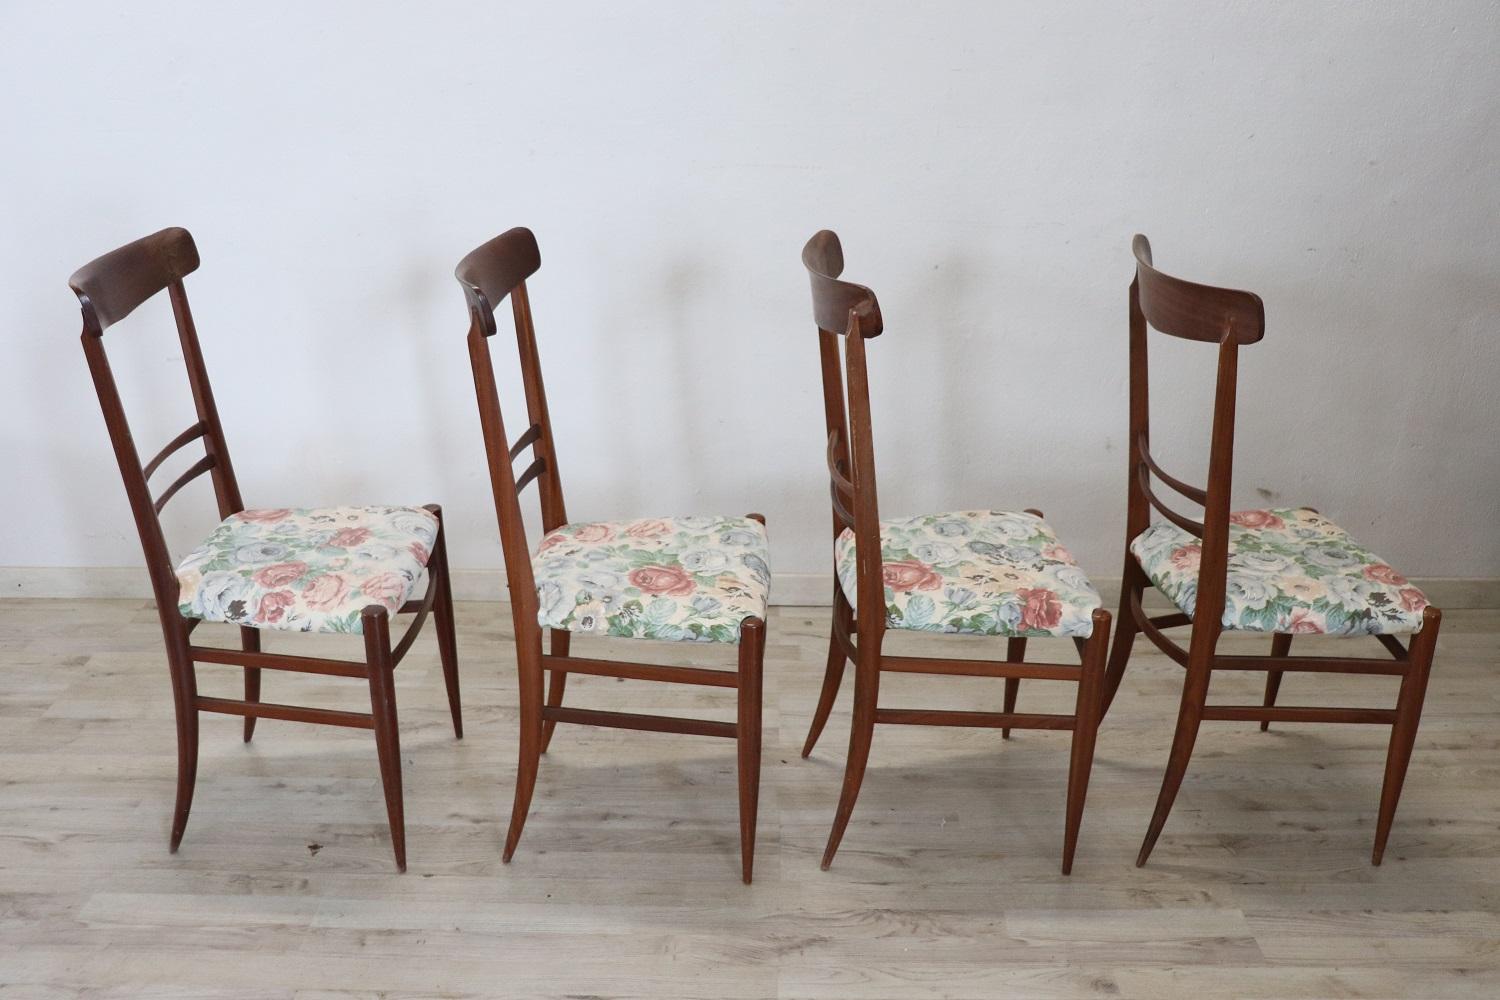 20th Century Italian Design Set of Four Chairs in Teak, Ico Parisi 1950s For Sale 8